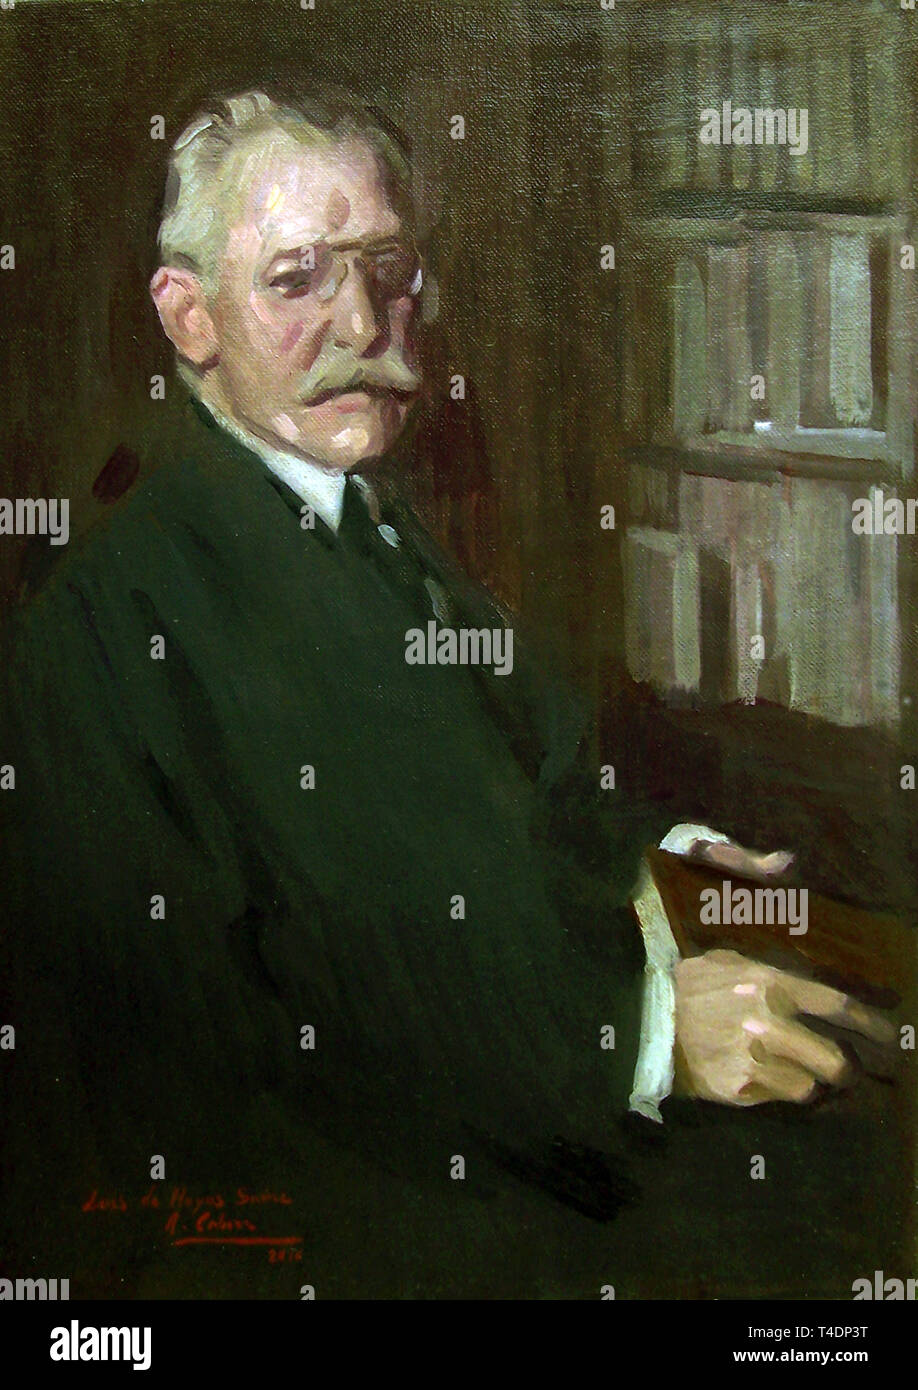 Retrato de Luis de Hoyos Sainz por artista español Alejandro Cabeza. Stock Photo